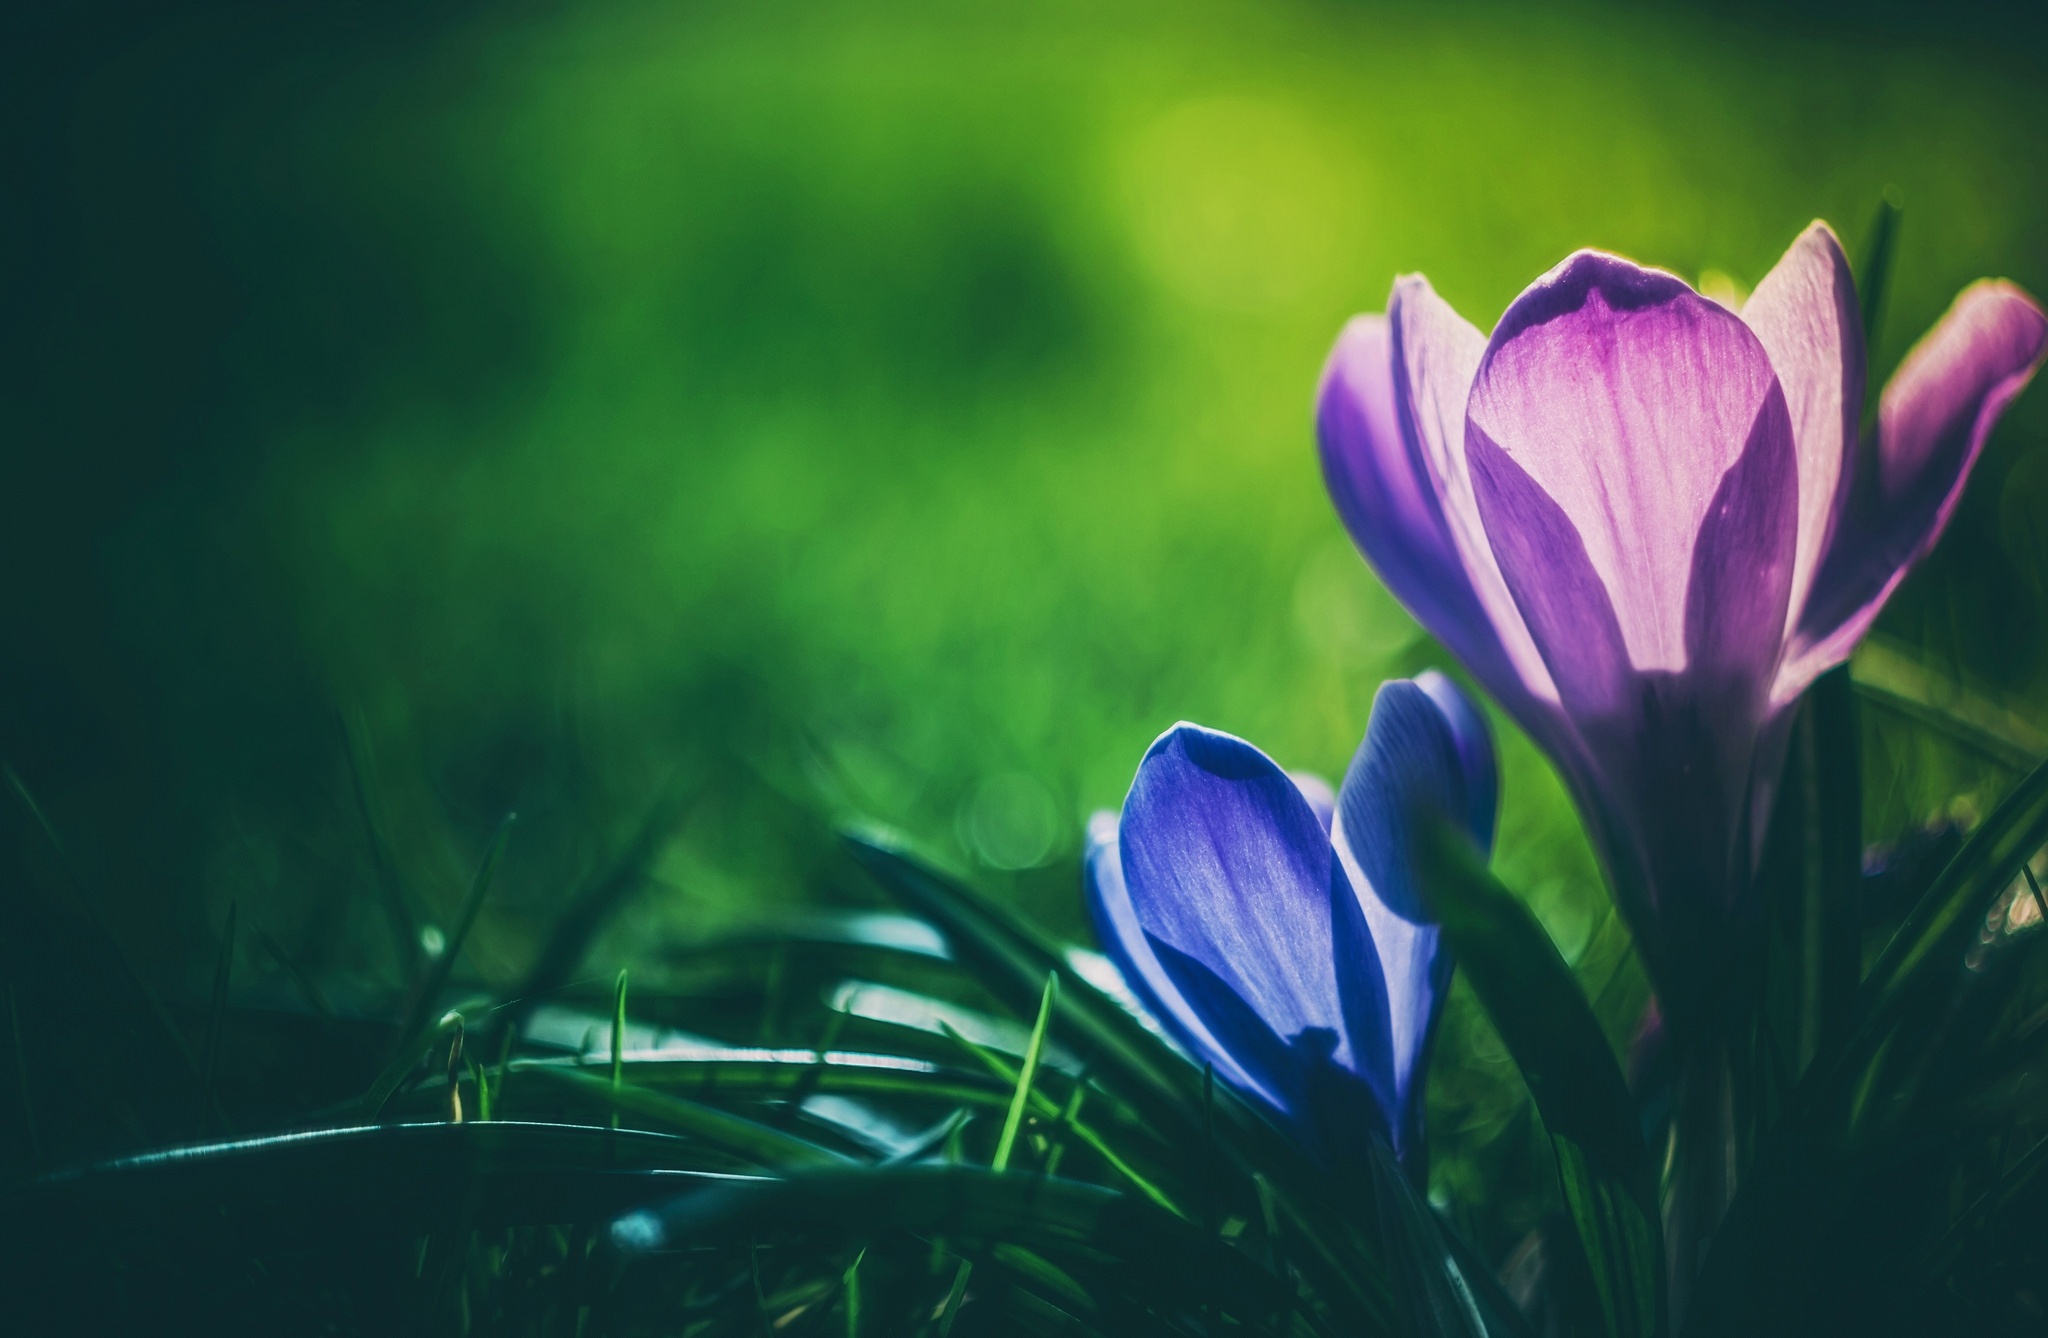 Descarga gratis la imagen Naturaleza, Flores, Flor, Primavera, Azafrán, Flor Purpura, Tierra/naturaleza, Difuminado, Flor Azul en el escritorio de tu PC